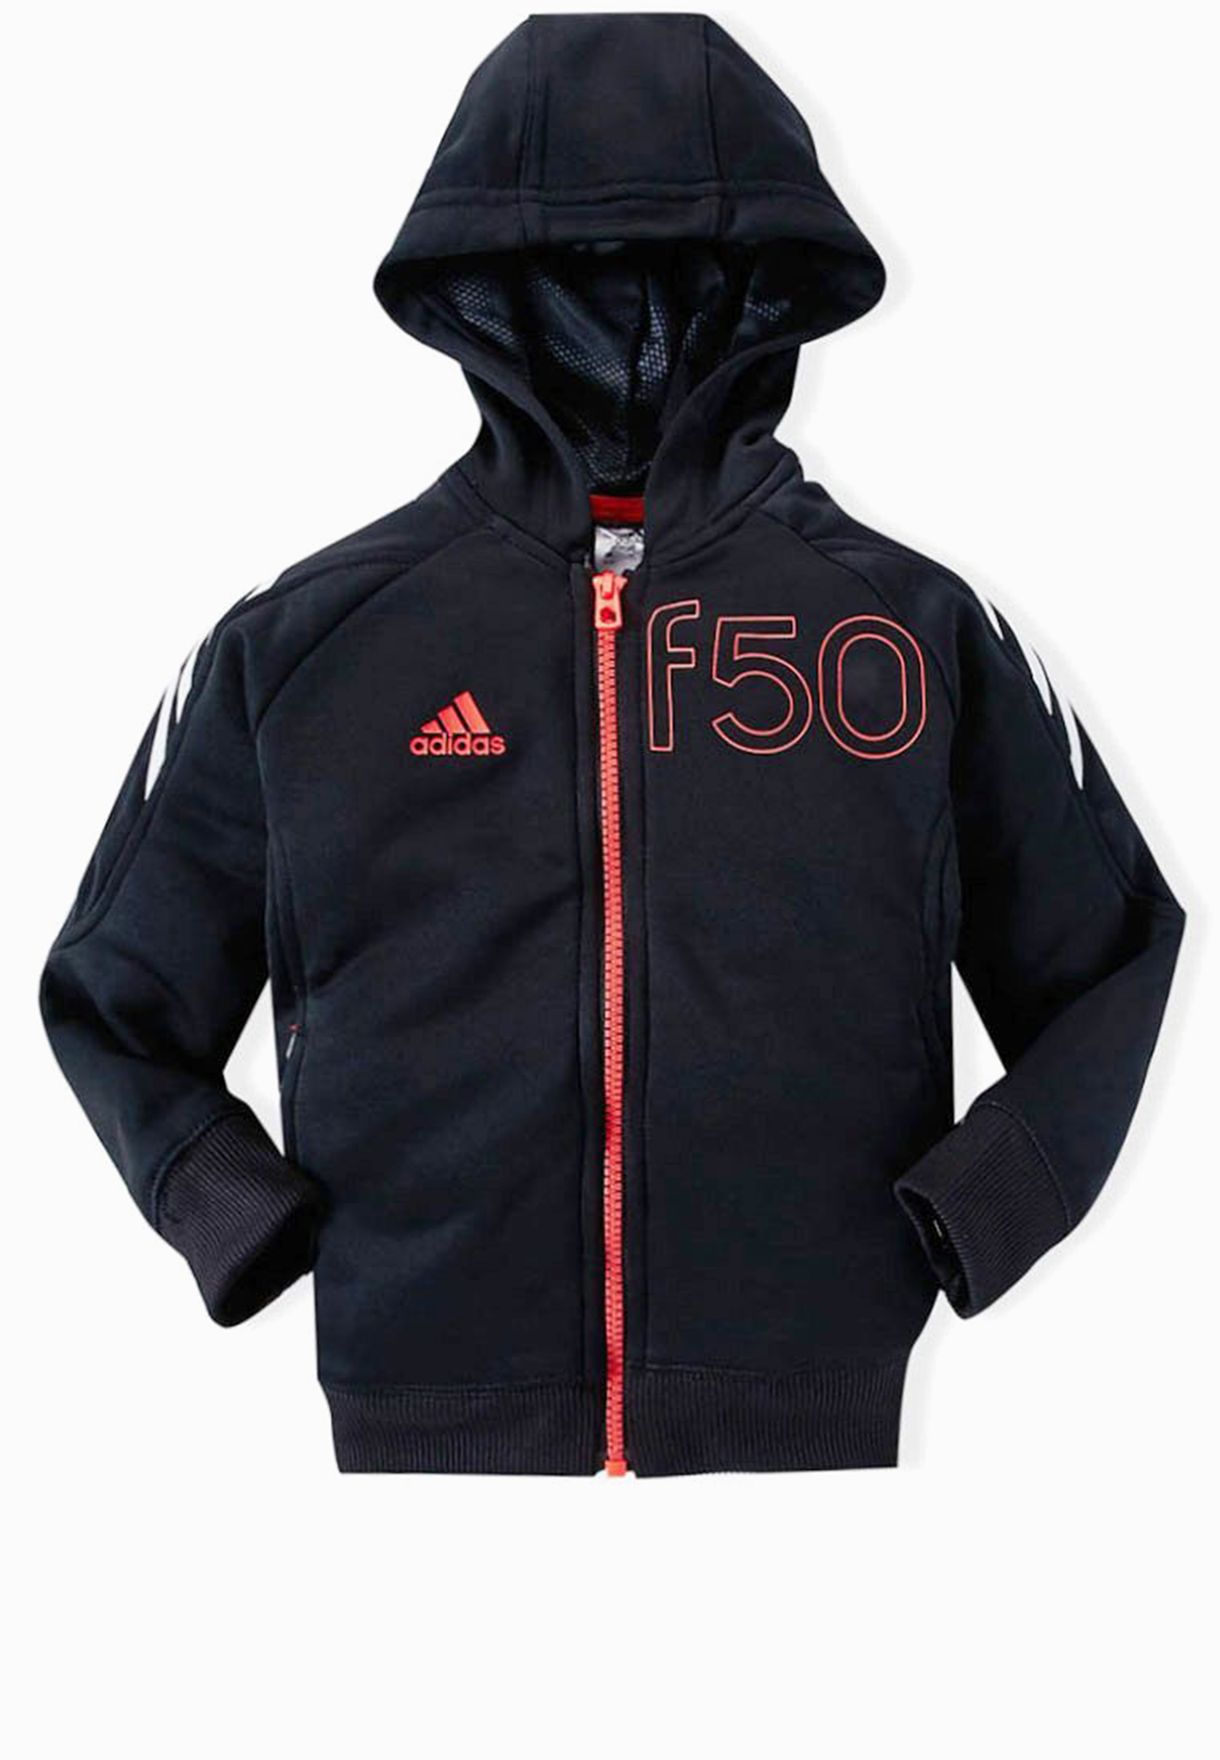 adidas f50 jacket